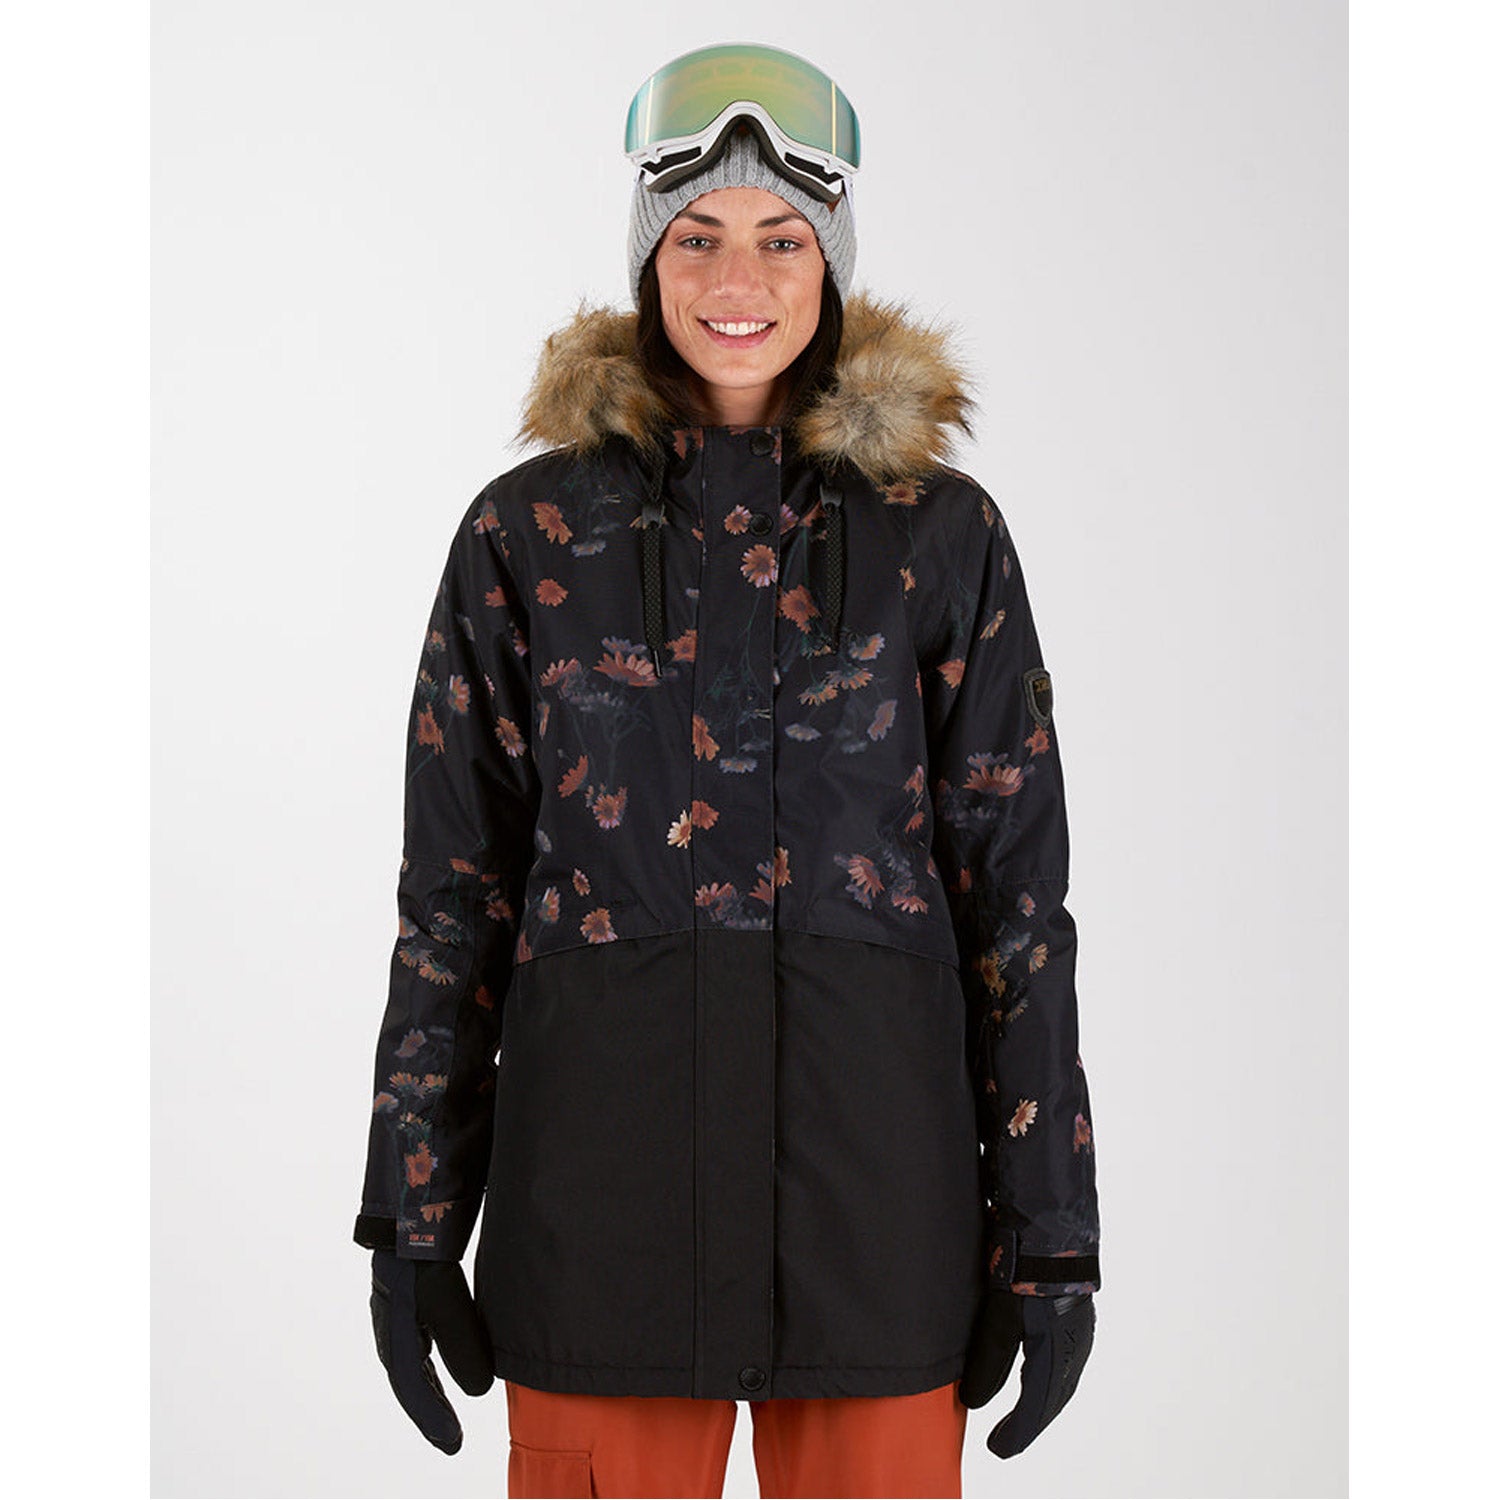 Nils Sundance Insulated Ski Jacket with Faux Fur (Women's)